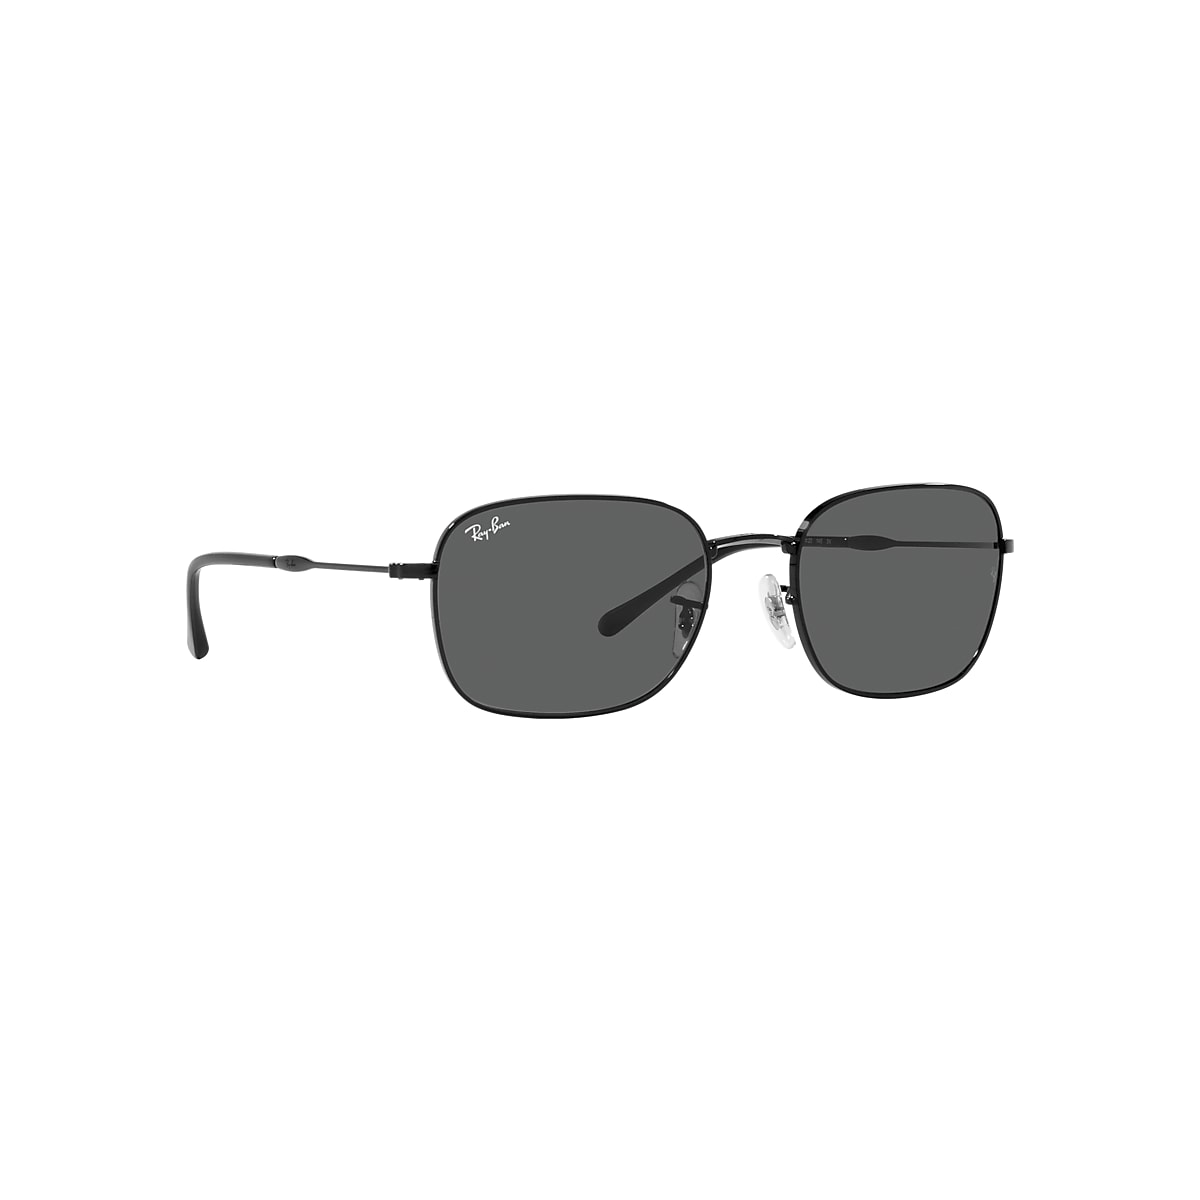 pen Duplikere hagl RB3706 Sunglasses in Black and Dark Grey - RB3706 | Ray-Ban® US